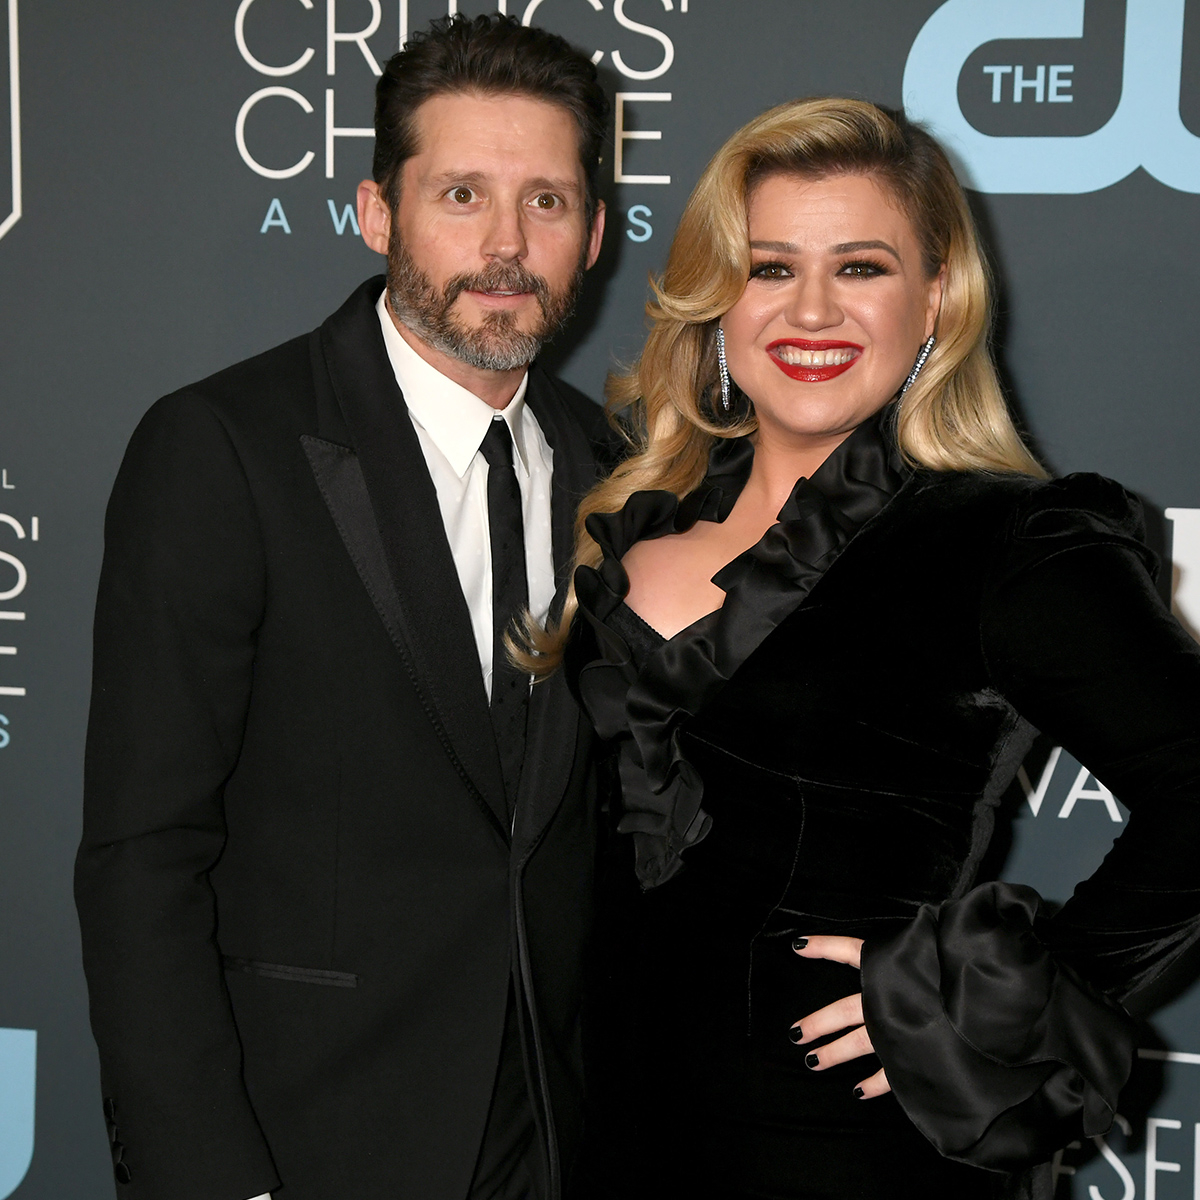 Kelly Clarkson Changes 'Piece by Piece' Lyrics After Divorce